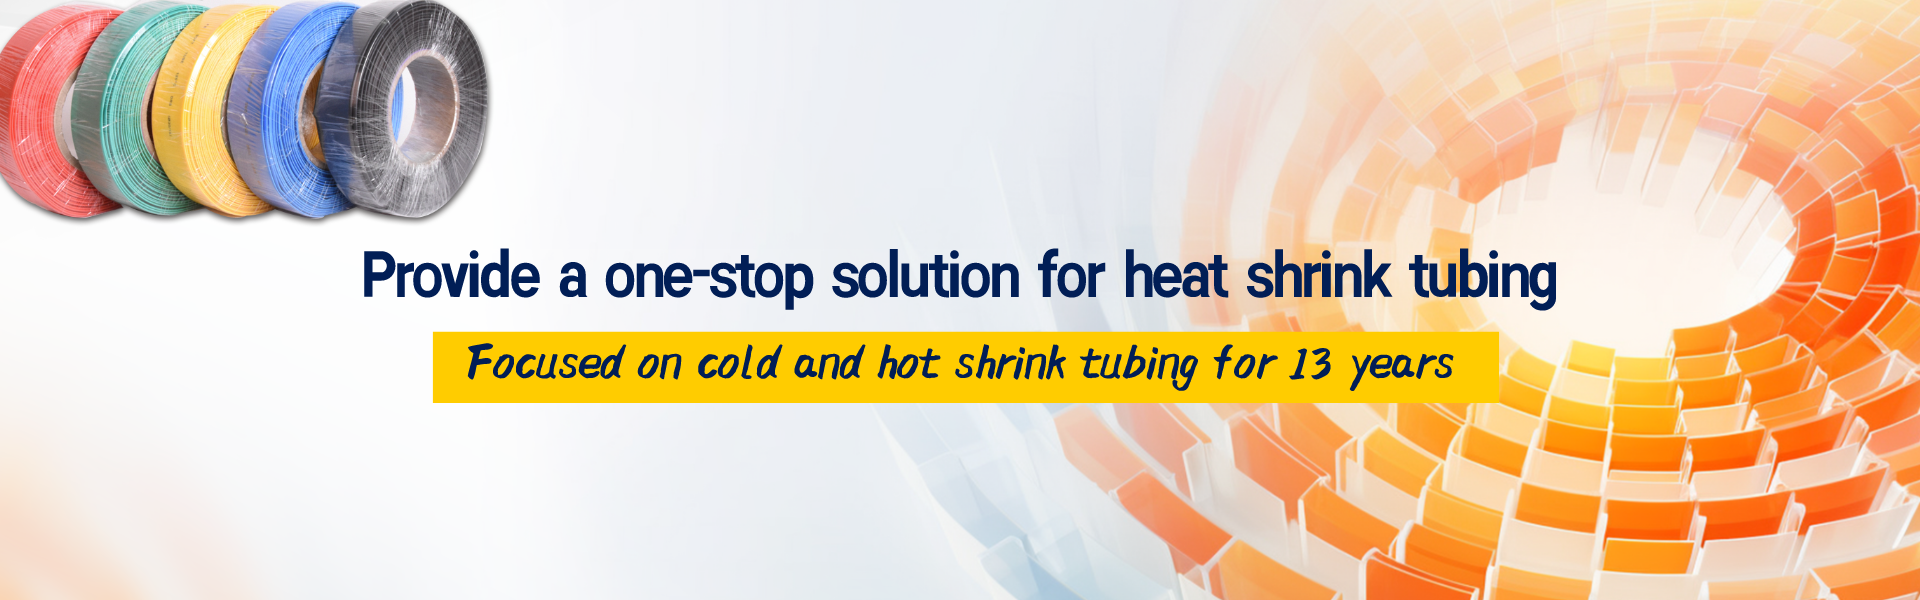 Suzhou Feibo Heat & Cold Shrink Products CO.LTD.